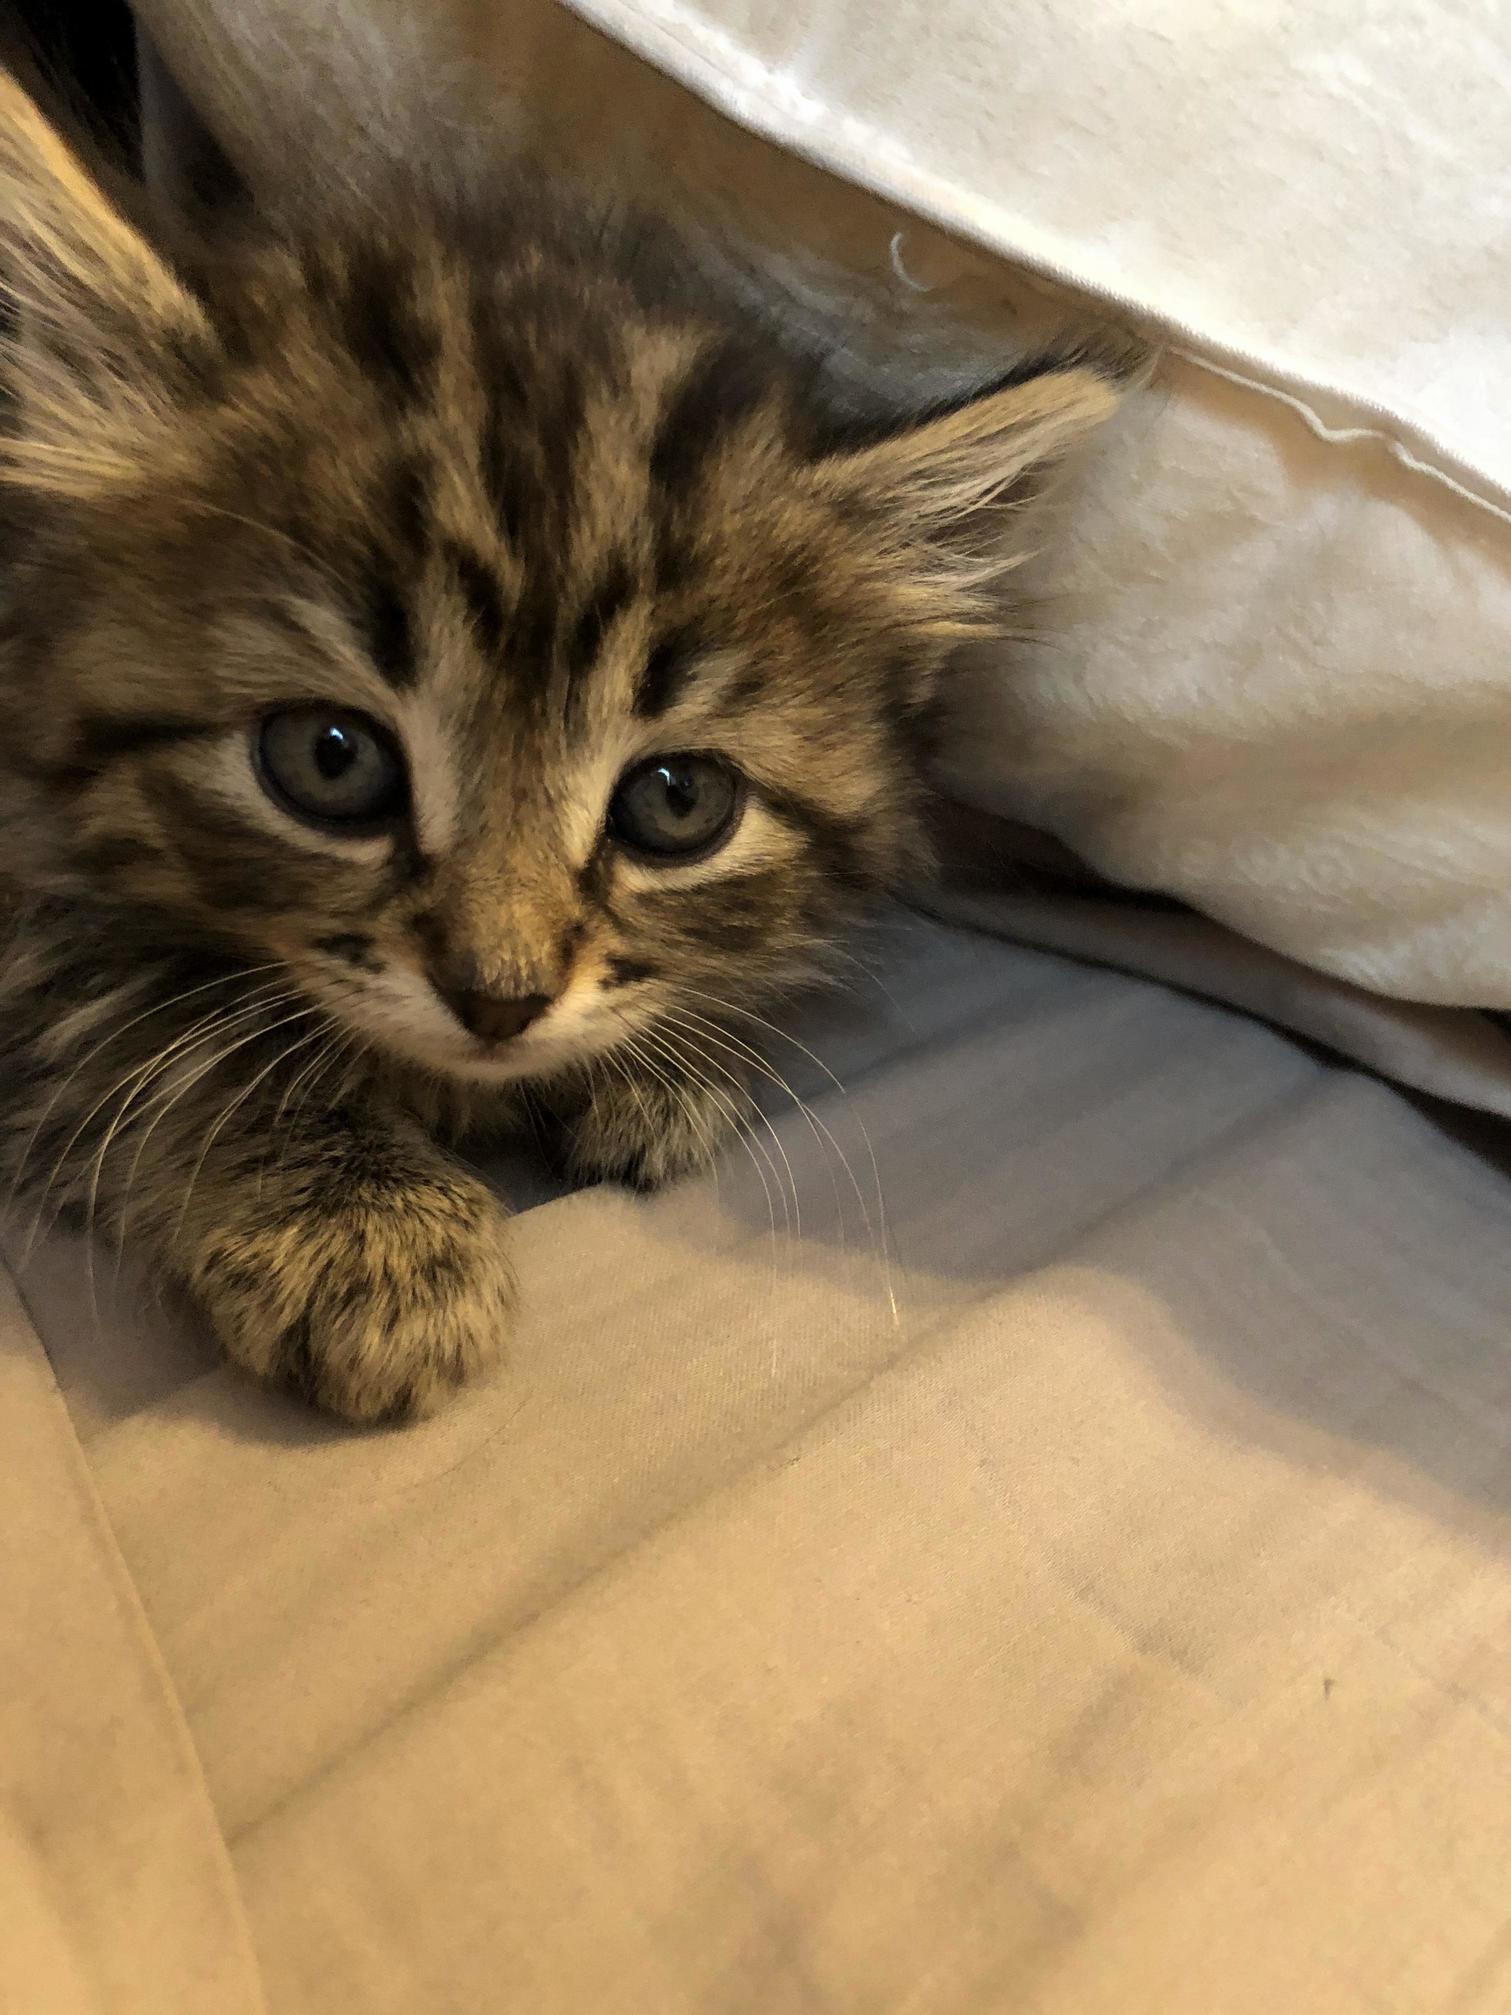 Name my cat! (4 week old female kitten)